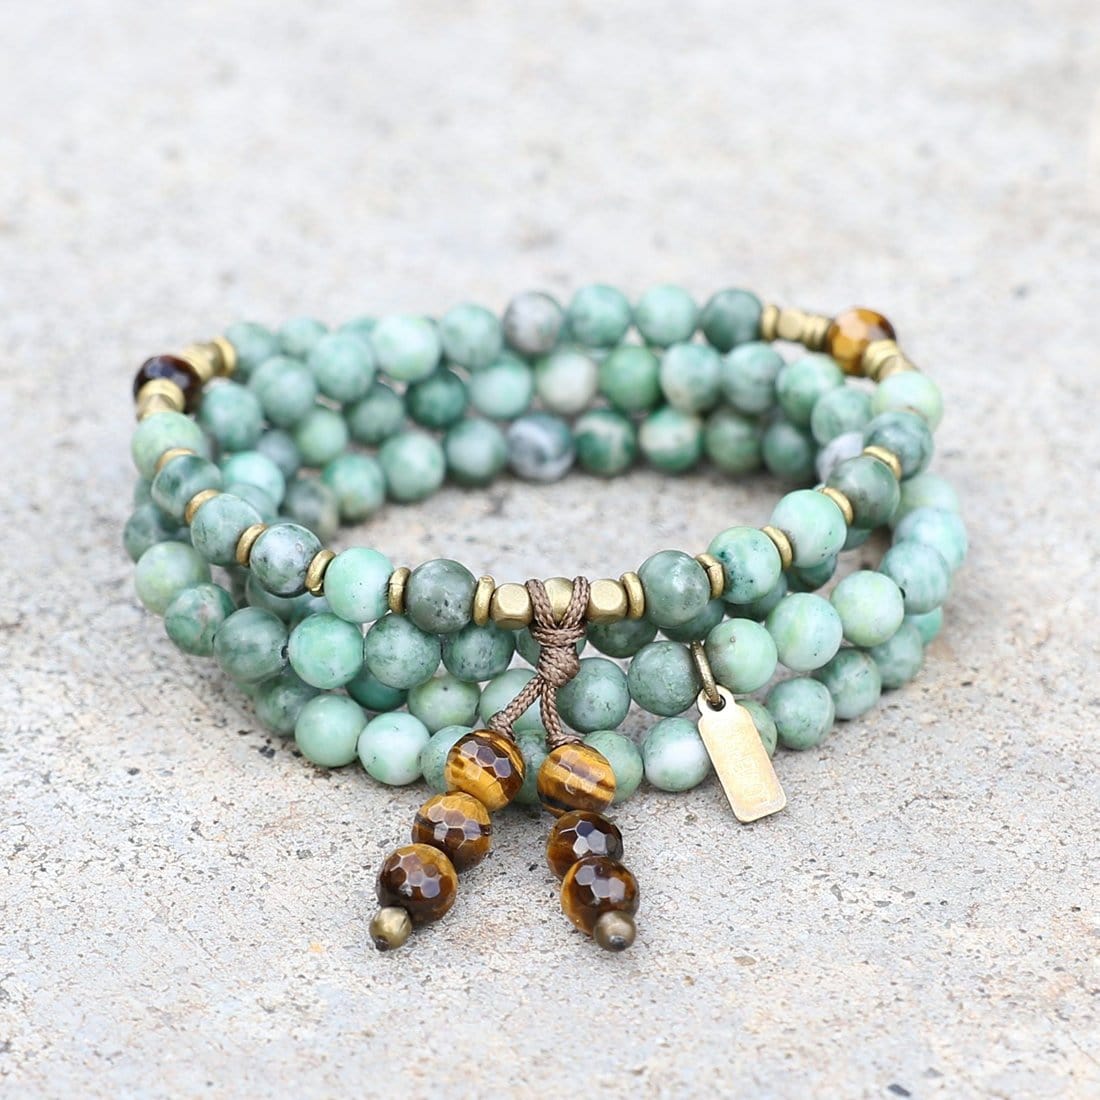 Bracelets - Jade Mala Beads, Wrap 108 Bead Mala Bracelet Or Necklace